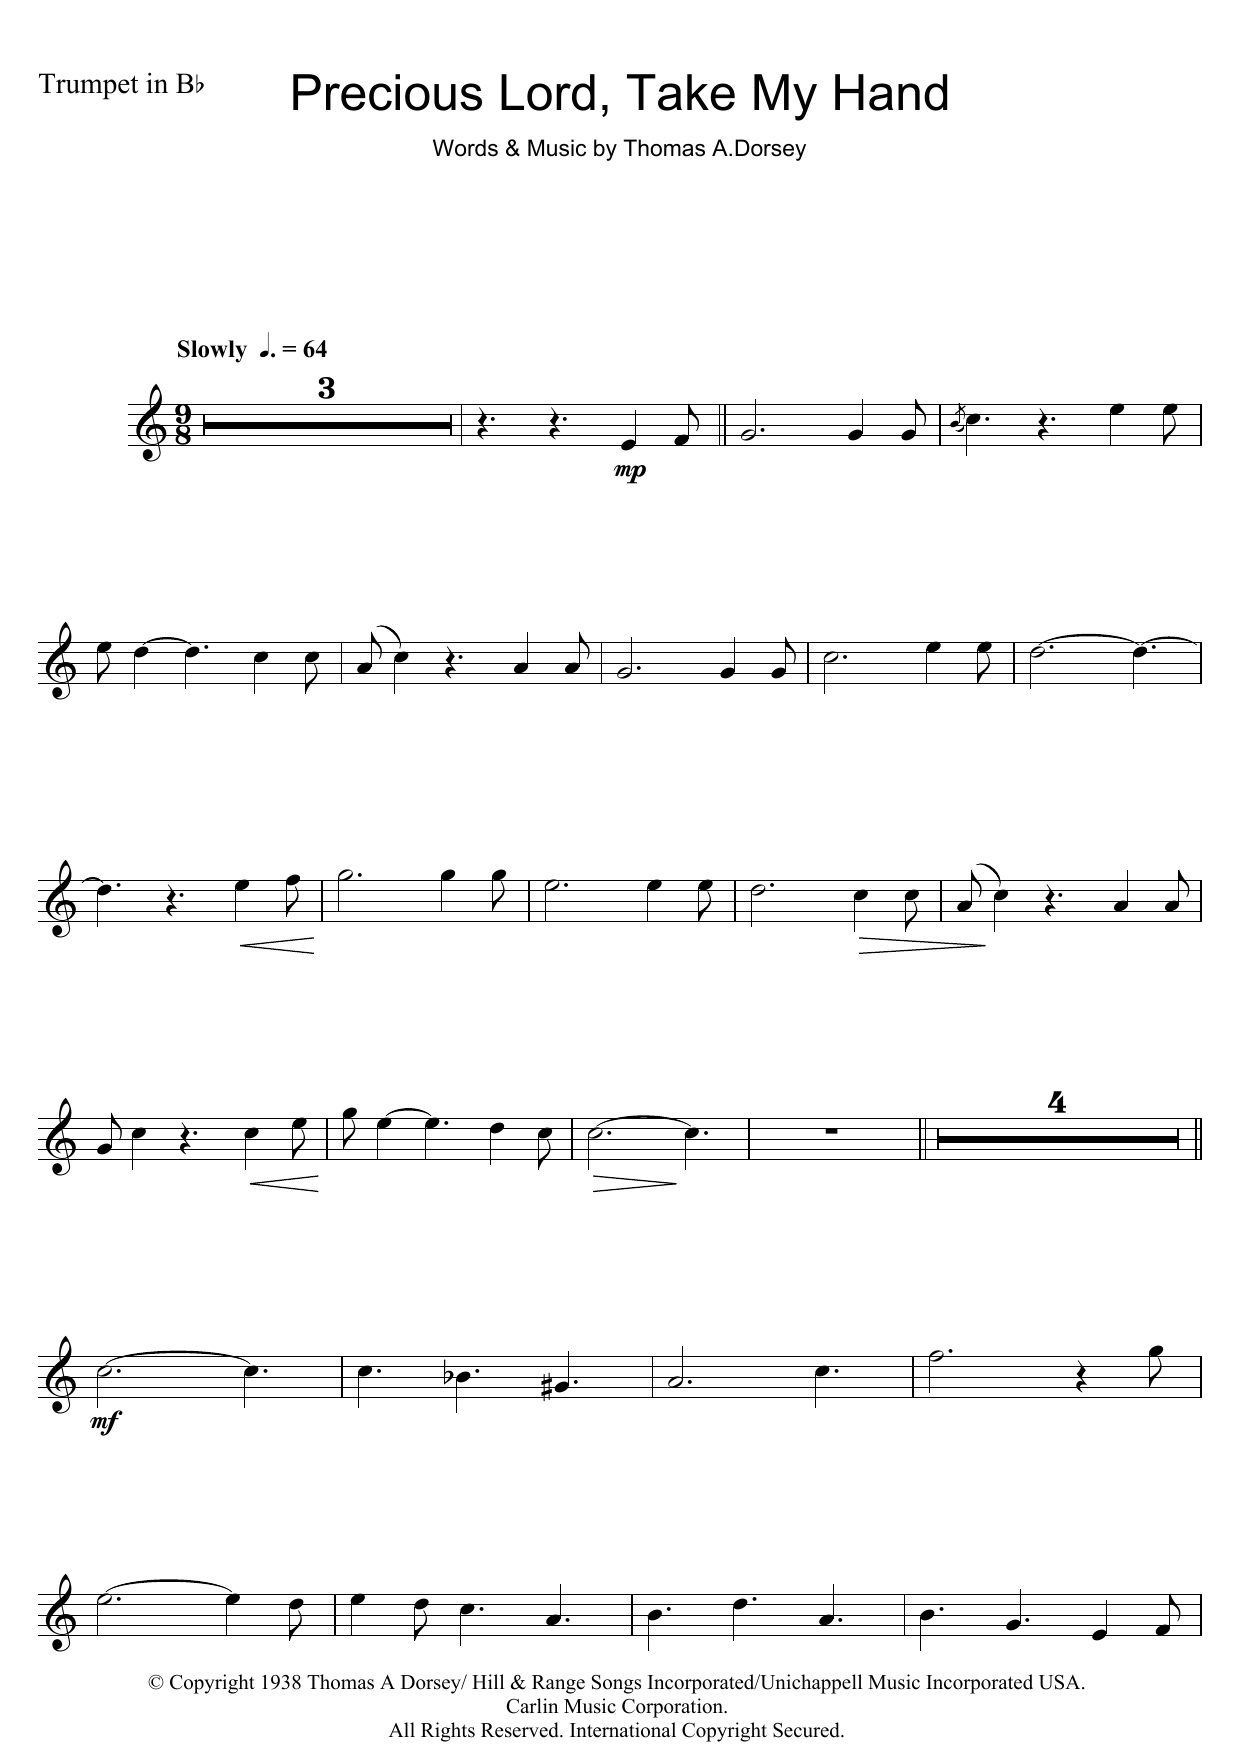 Aretha Franklin Precious Lord, Take My Hand (Take My Hand, Precious Lord) Sheet Music Notes & Chords for Trumpet - Download or Print PDF